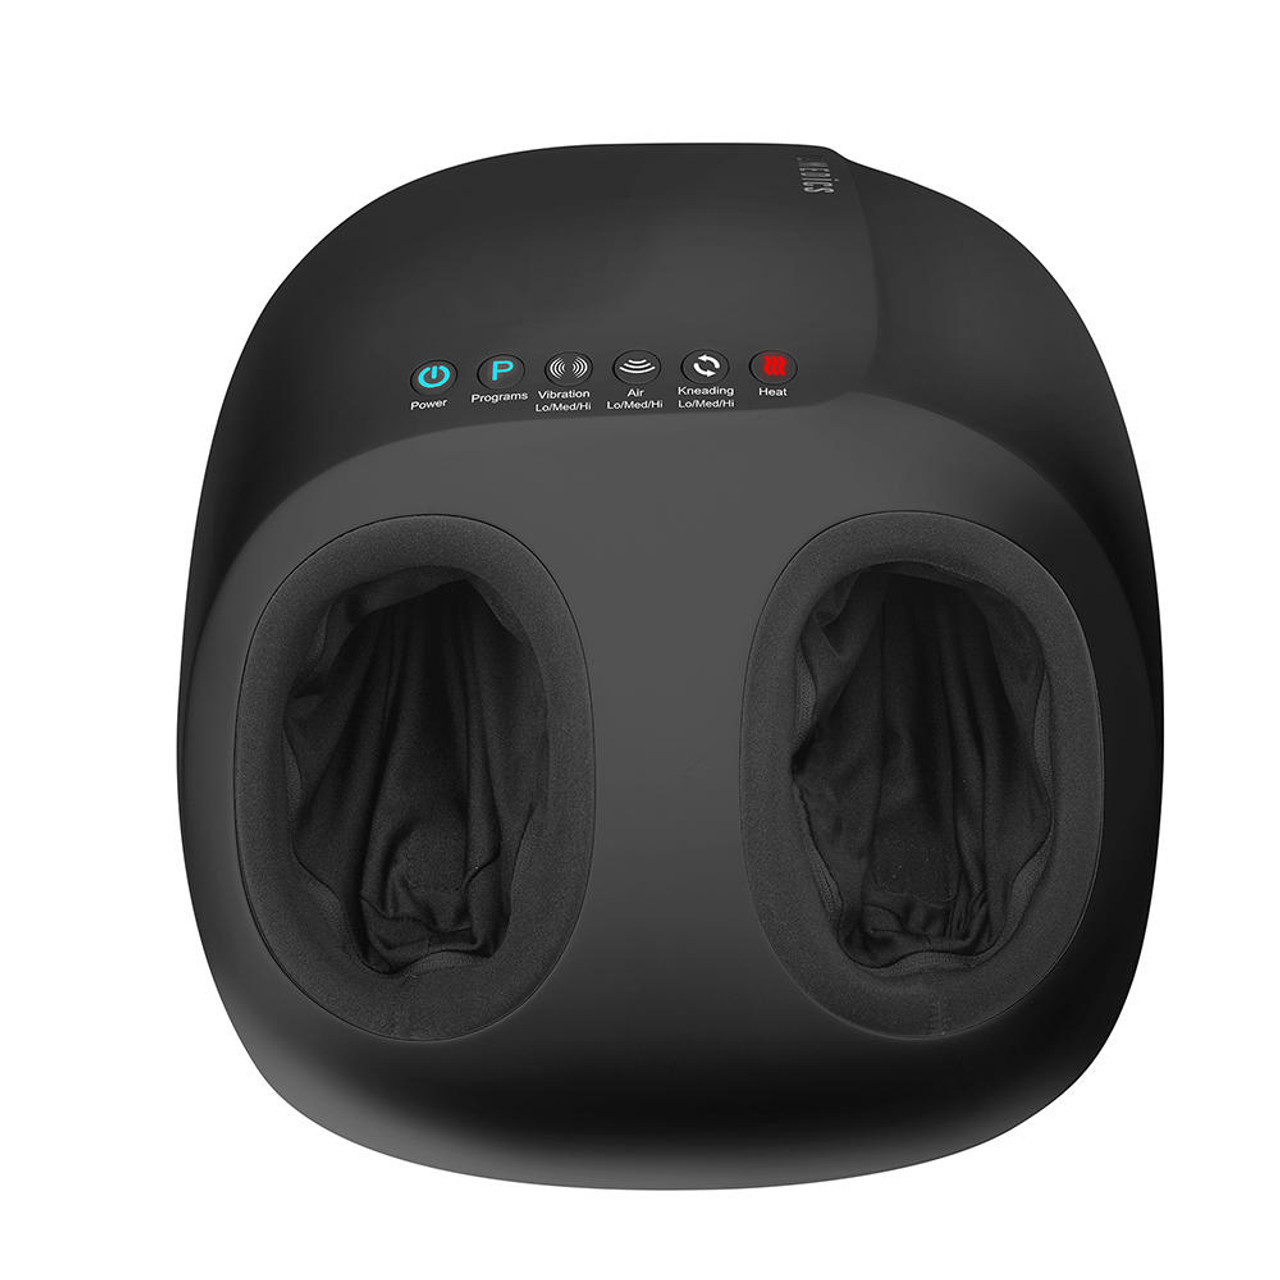 Etekcity Wireless Shiatsu Massager with Heat & Adjustable Intensity 